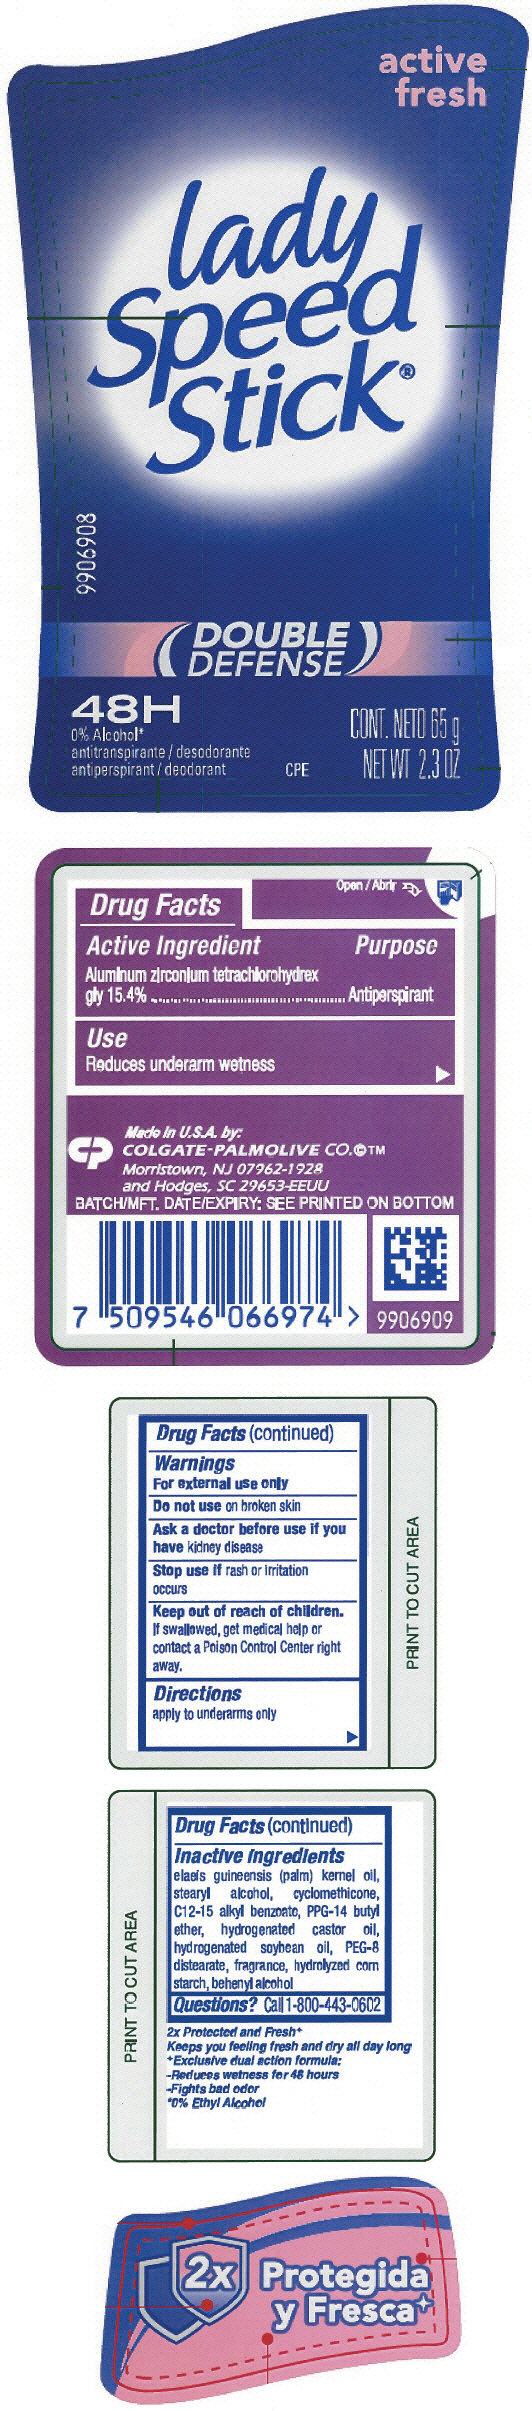 PRINCIPAL DISPLAY PANEL - 65 g Container Label